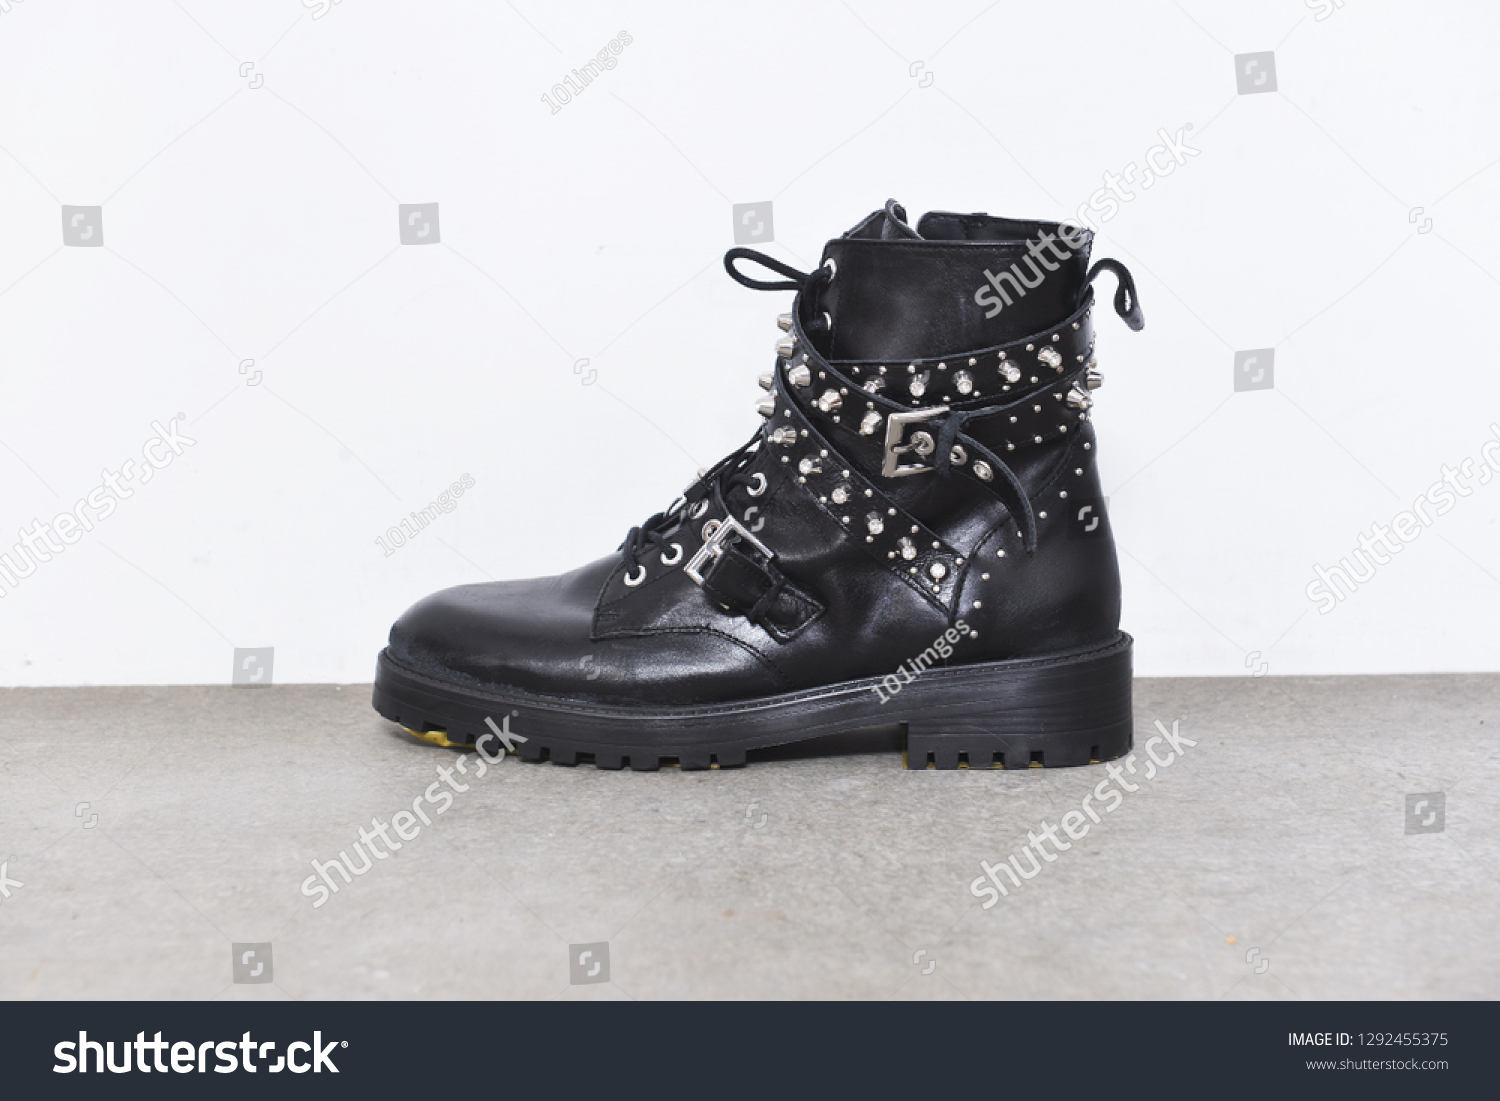 Single Punk Rock Shoes Isolatedgray Background Stock Photo Edit Now